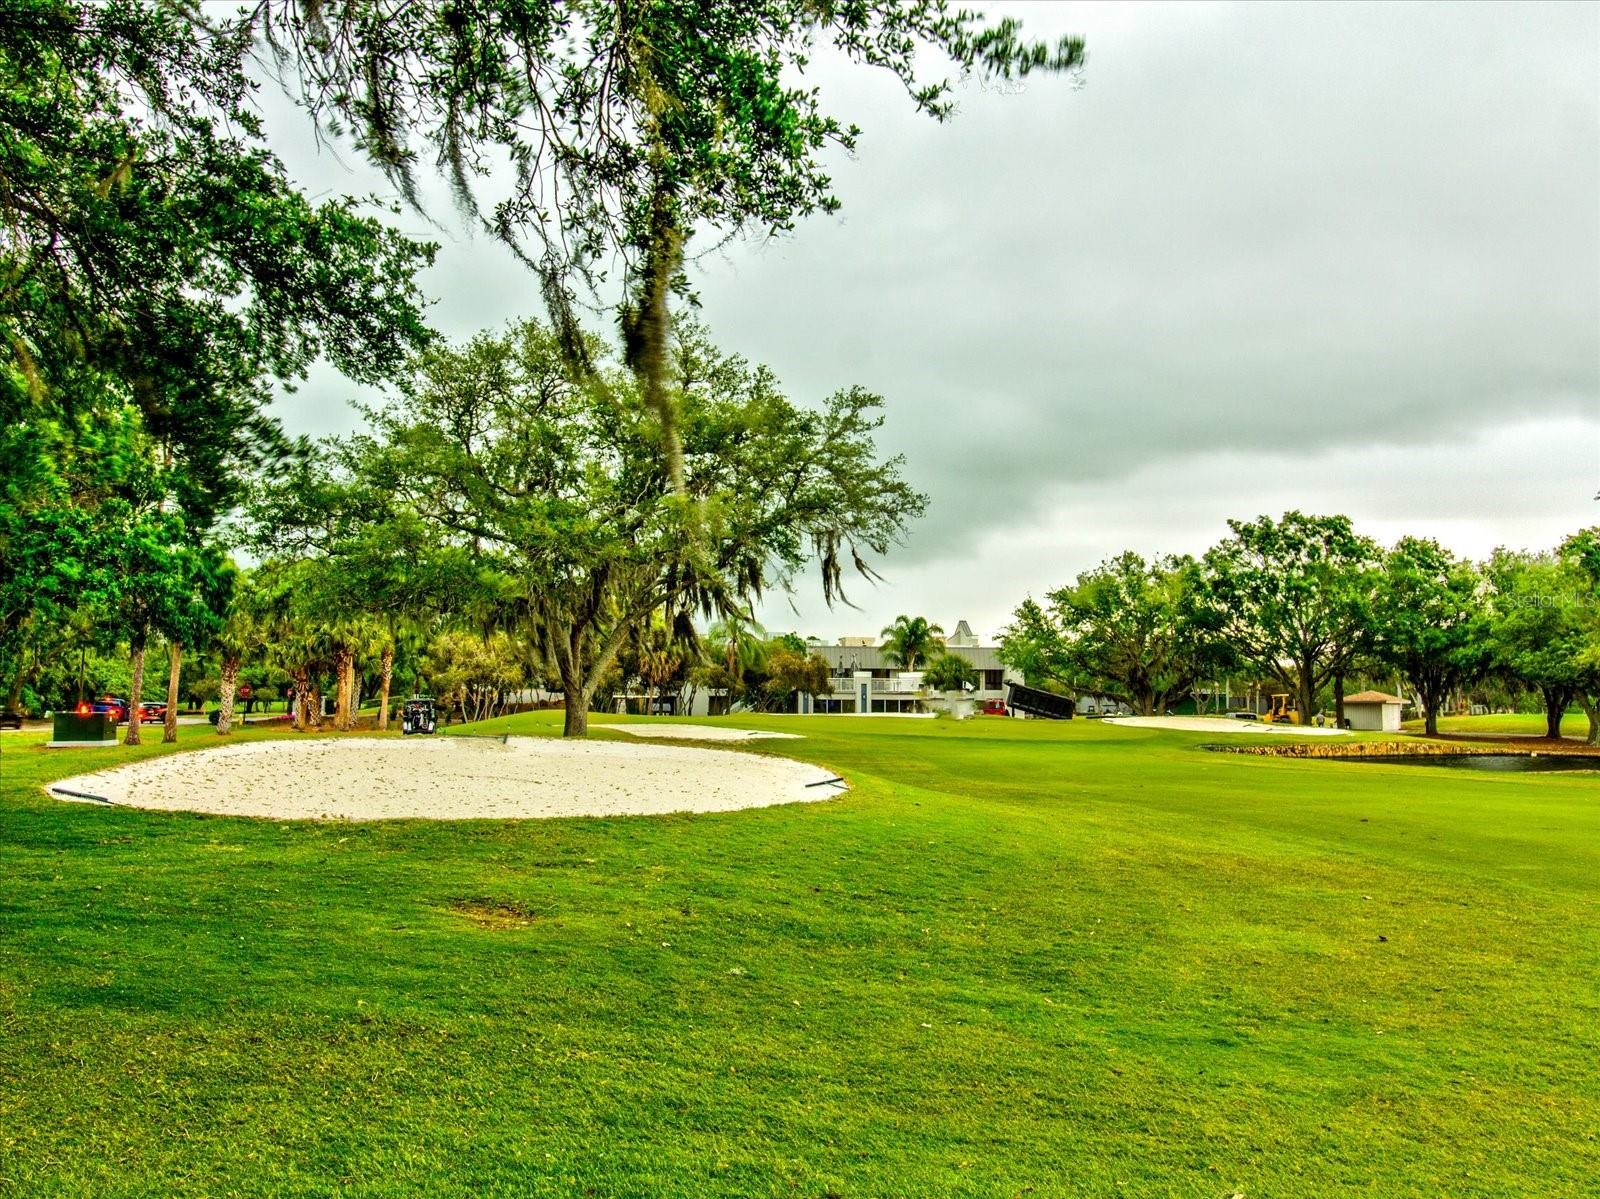 Golf Course field